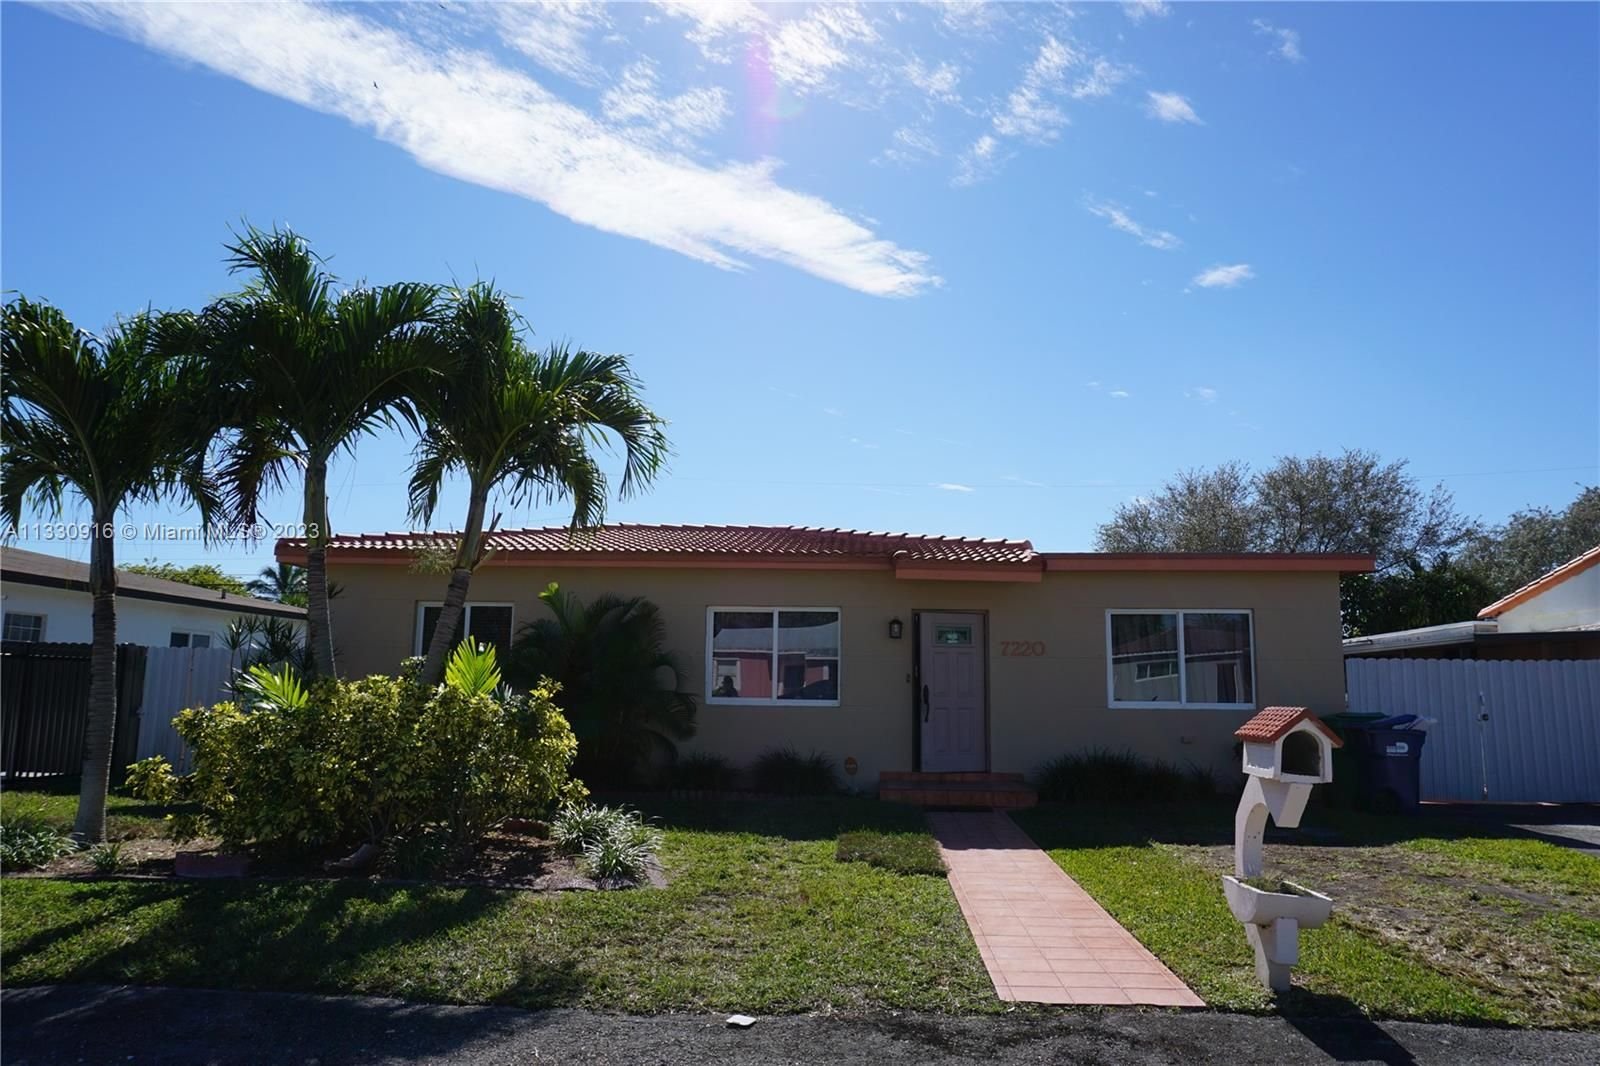 Real estate property located at 7220 14th St, Miami-Dade County, Miami, FL